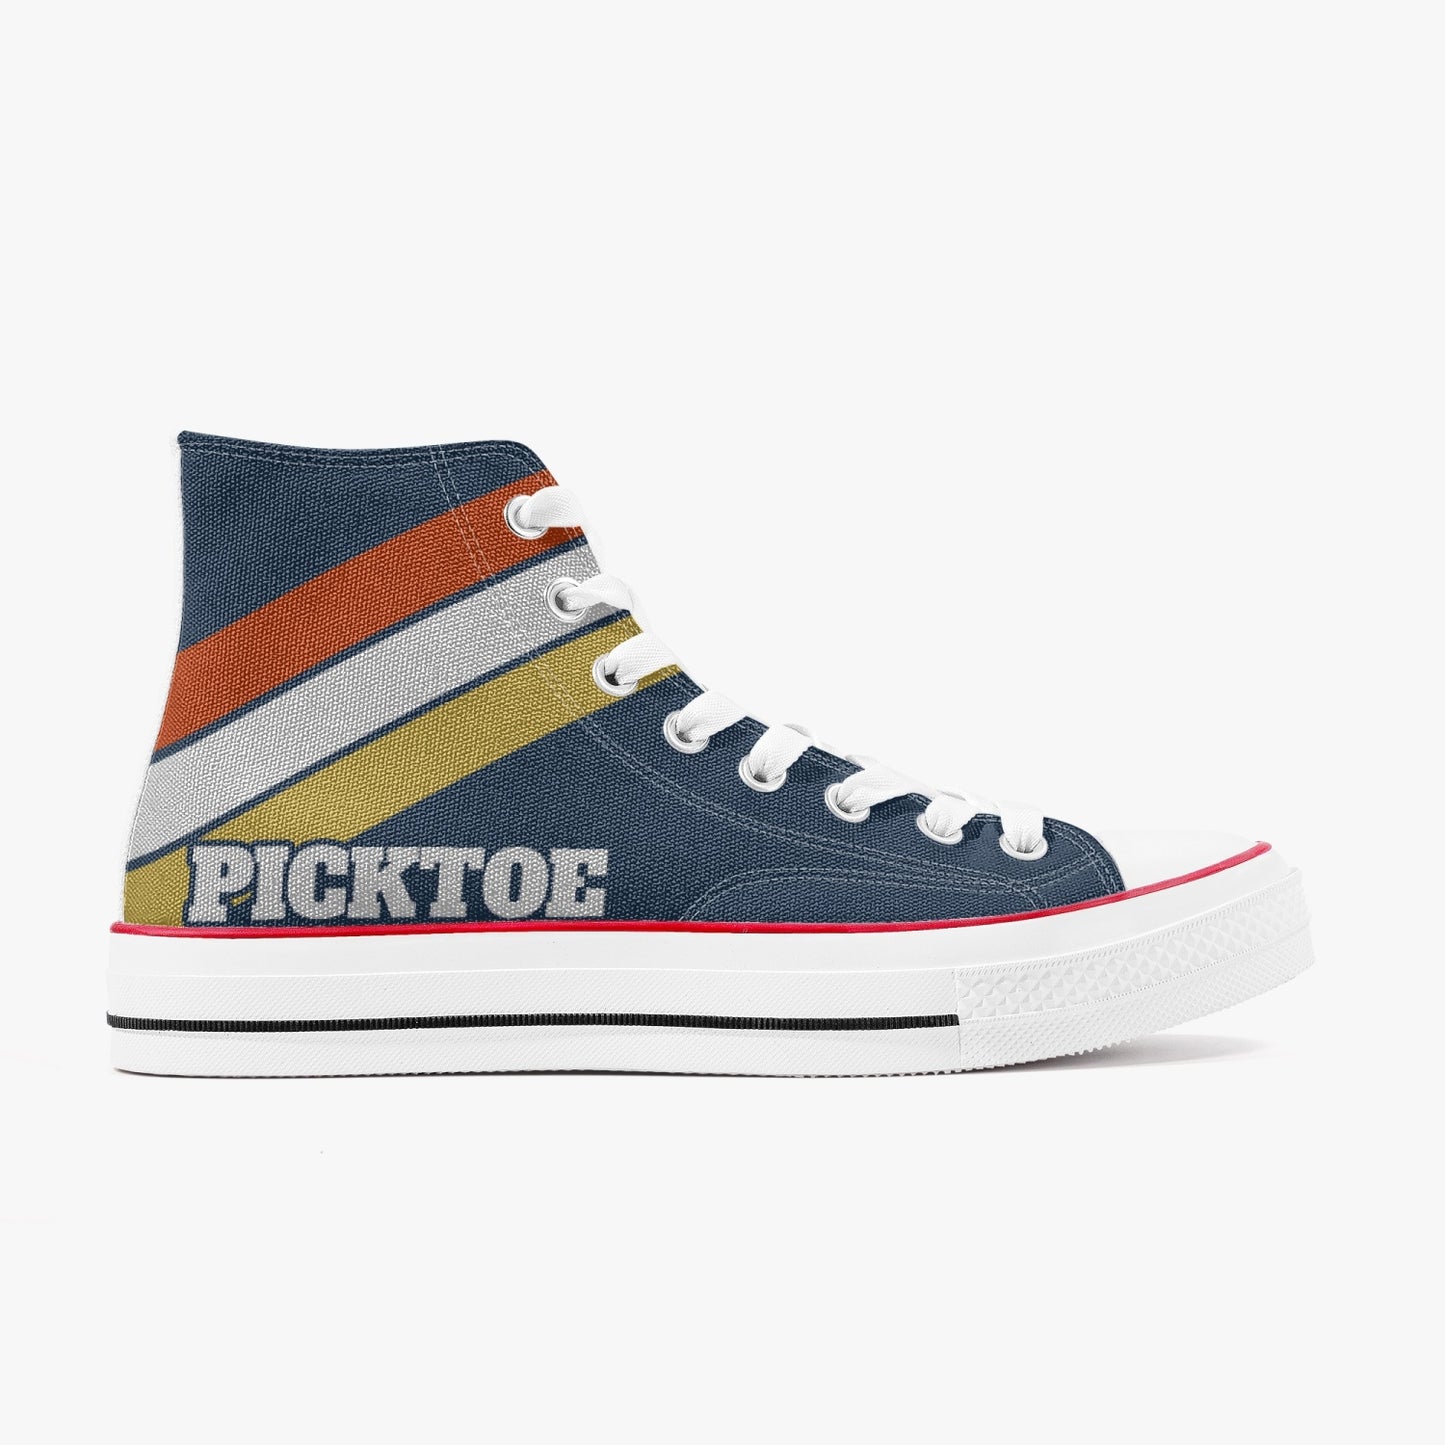 Picktoe Kicks